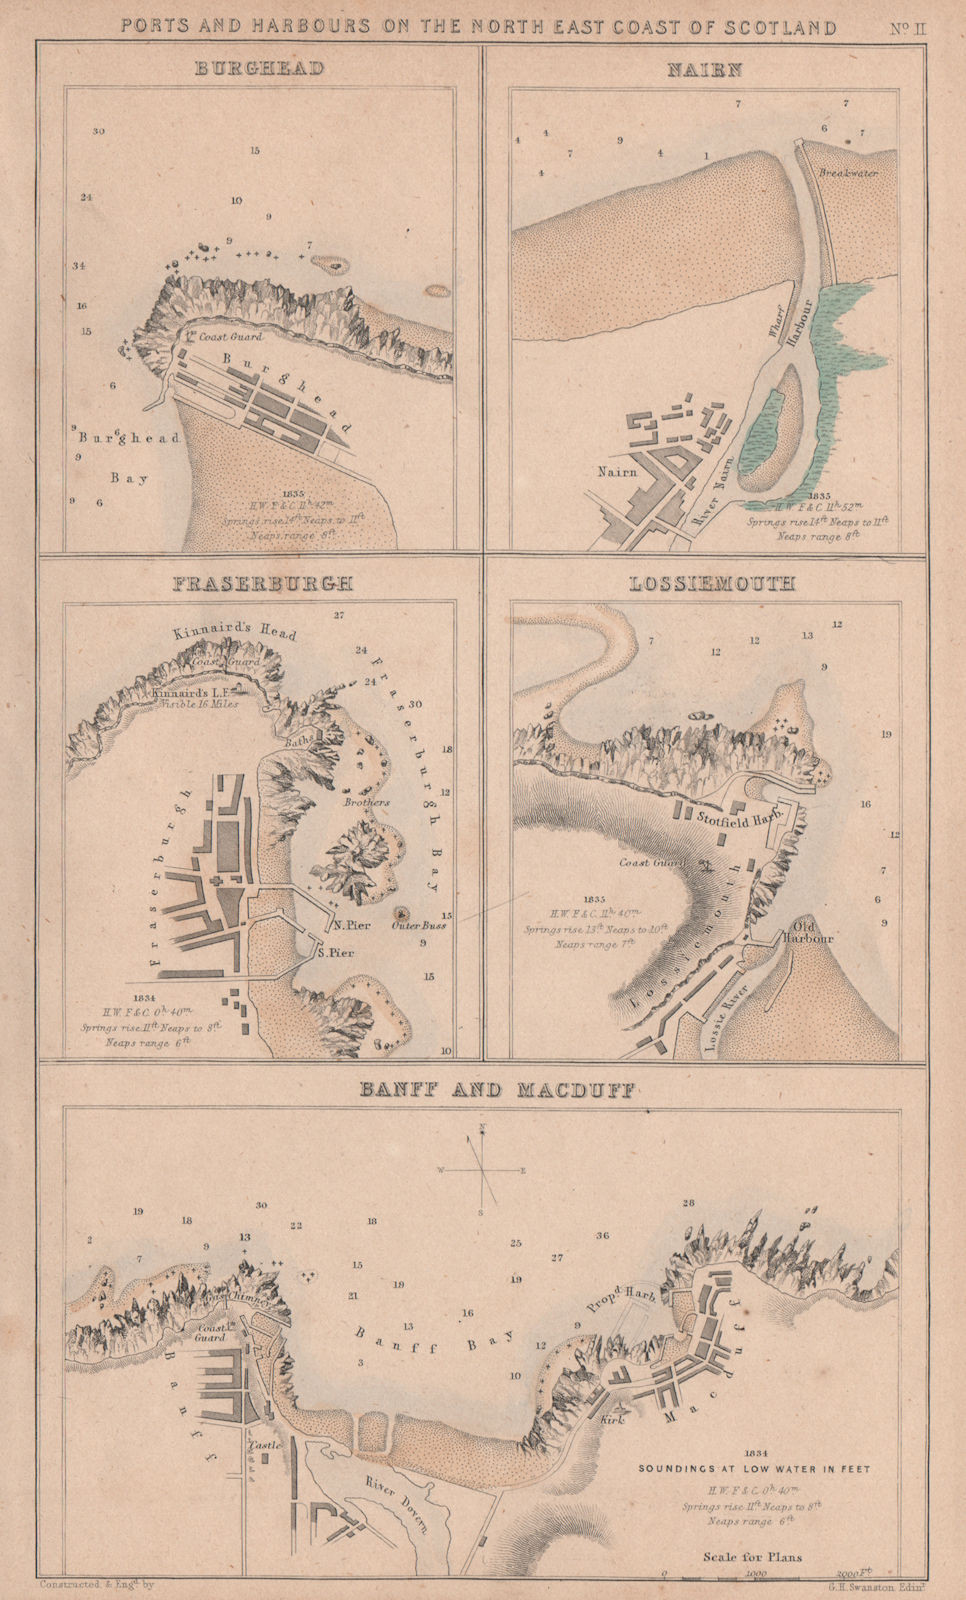 SCOTLAND NE PORTS Burghead Nairn Fraserburgh Lossiemouth Banff Macduff 1868 map